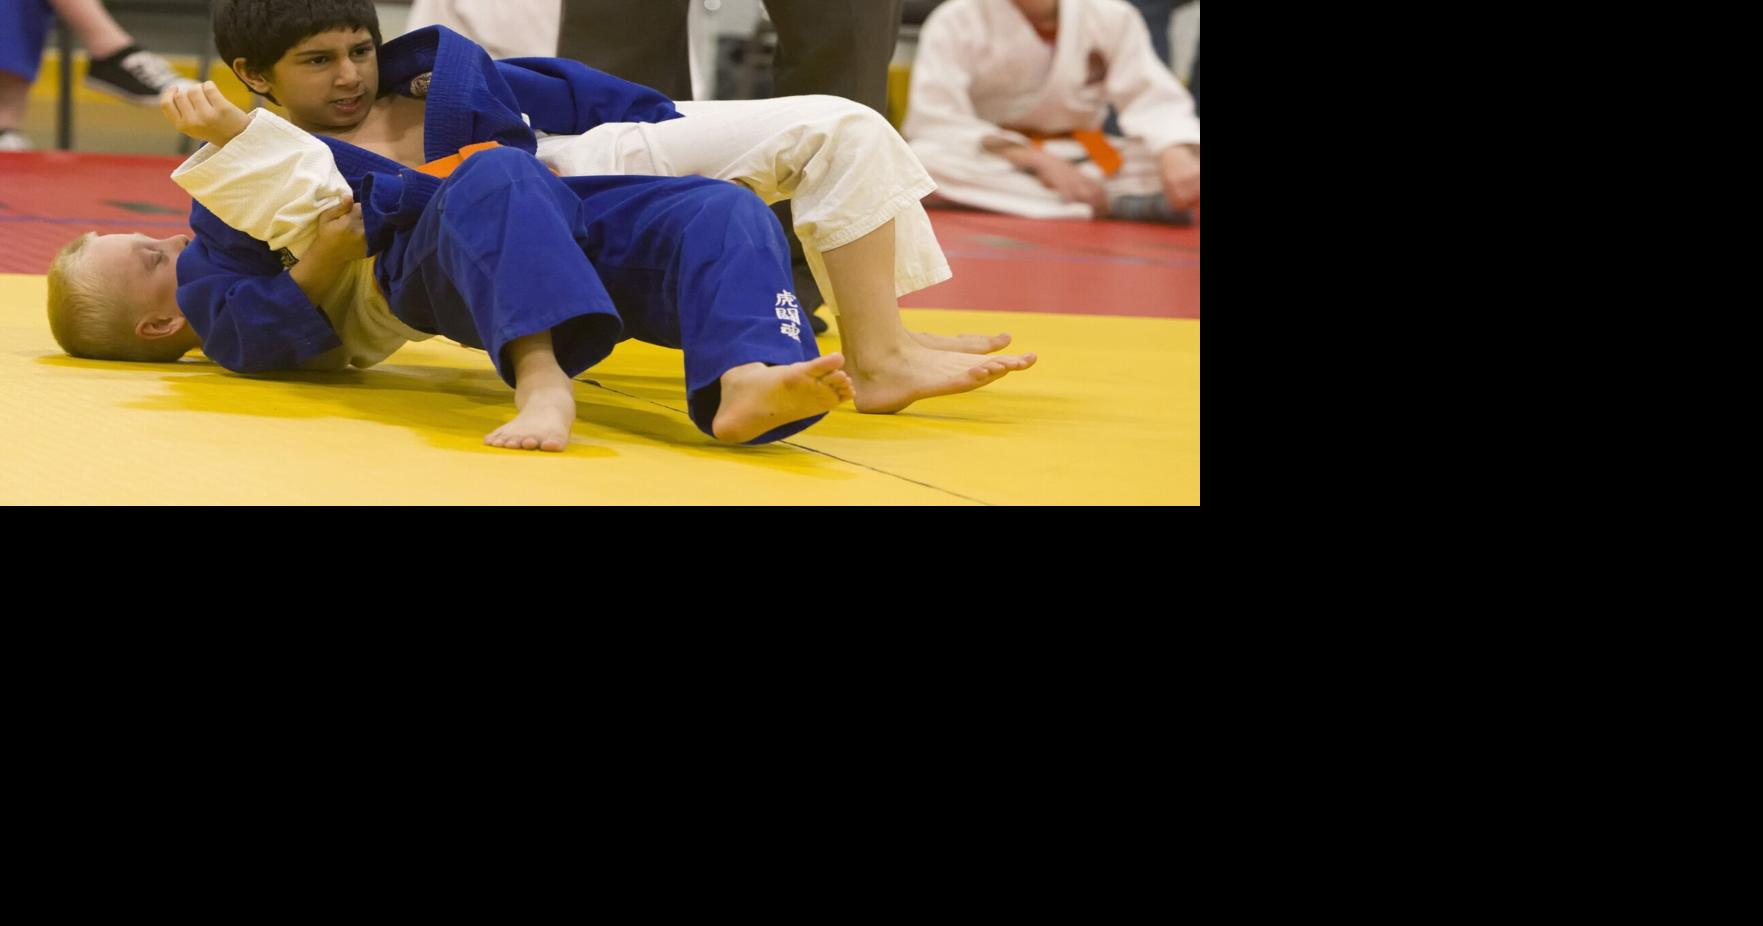 Tora Judo tournament coming to Brampton